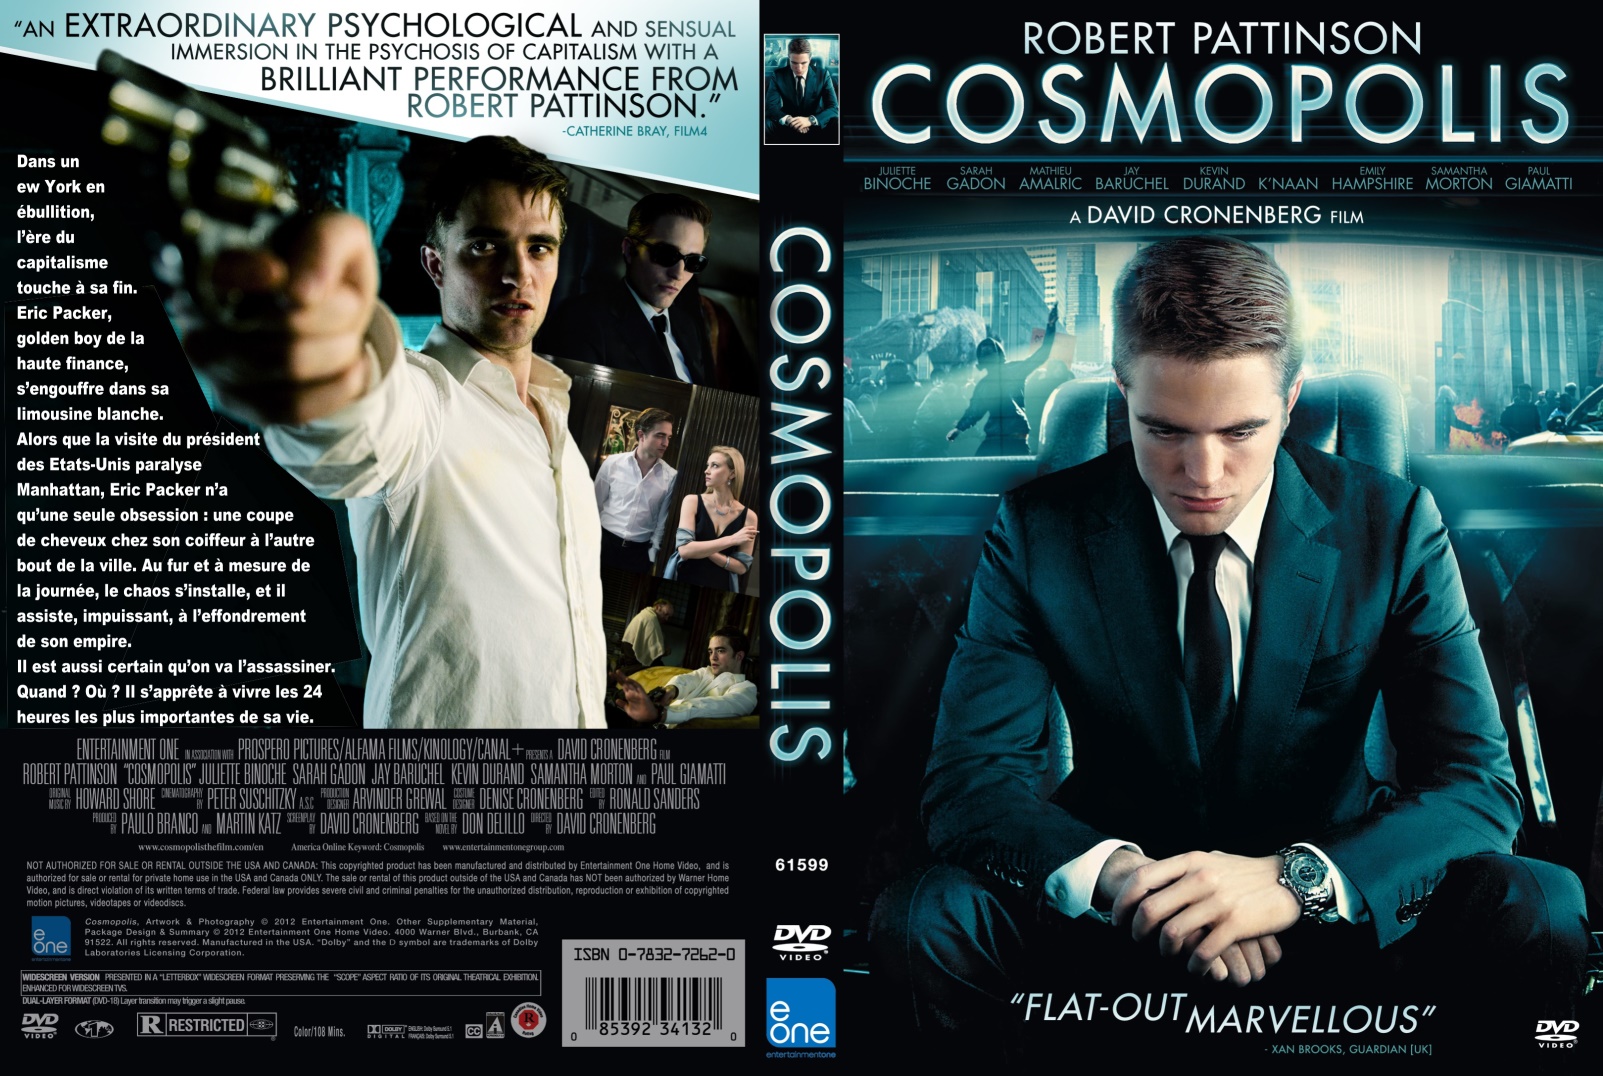 Jaquette DVD Cosmopolis custom